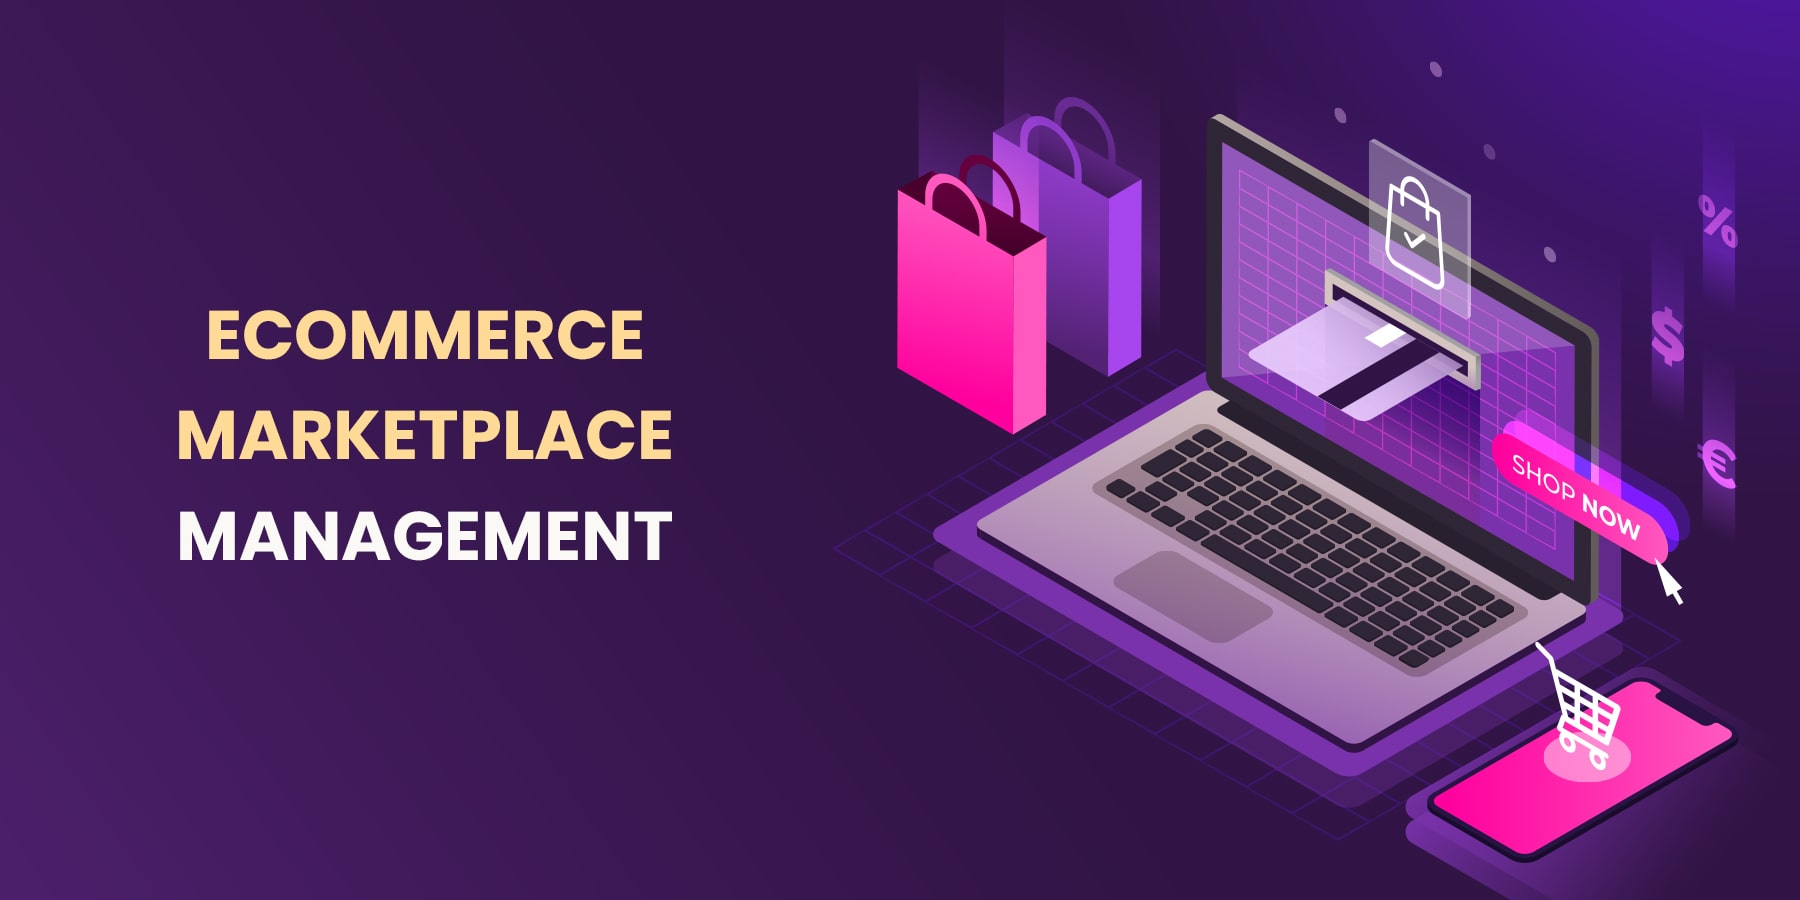 e-commerce marketplace